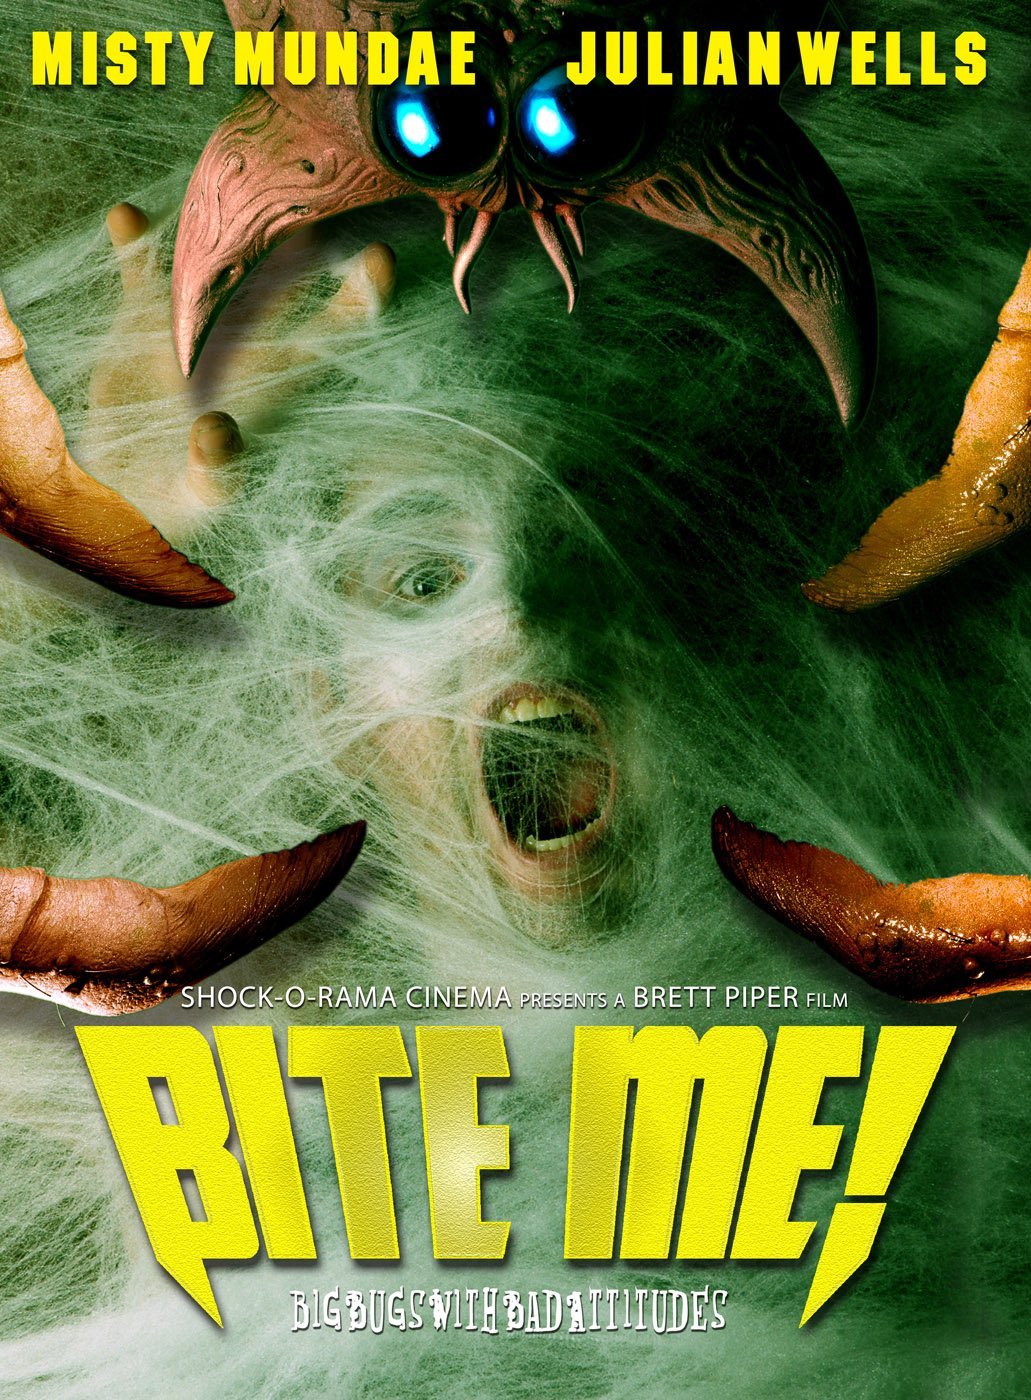 Episode 9: Bite Me! 